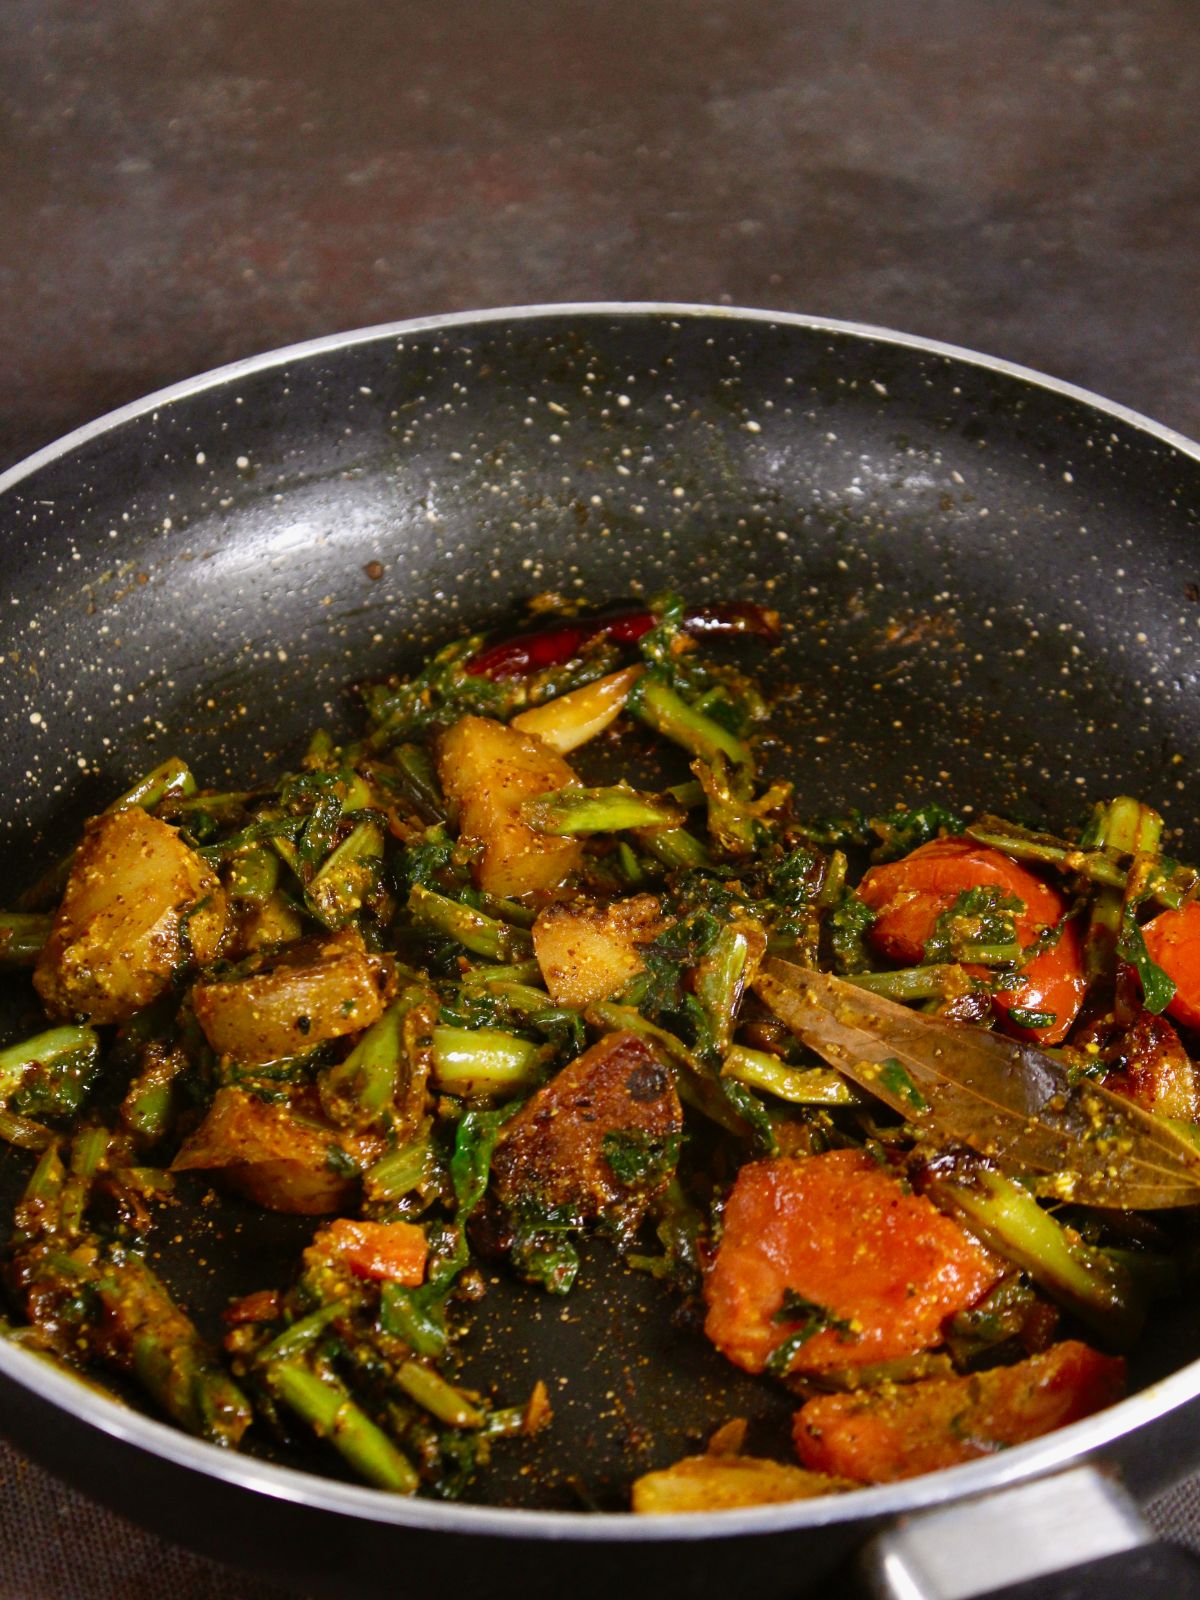 enjoy kasundi spinach with rice or roti 